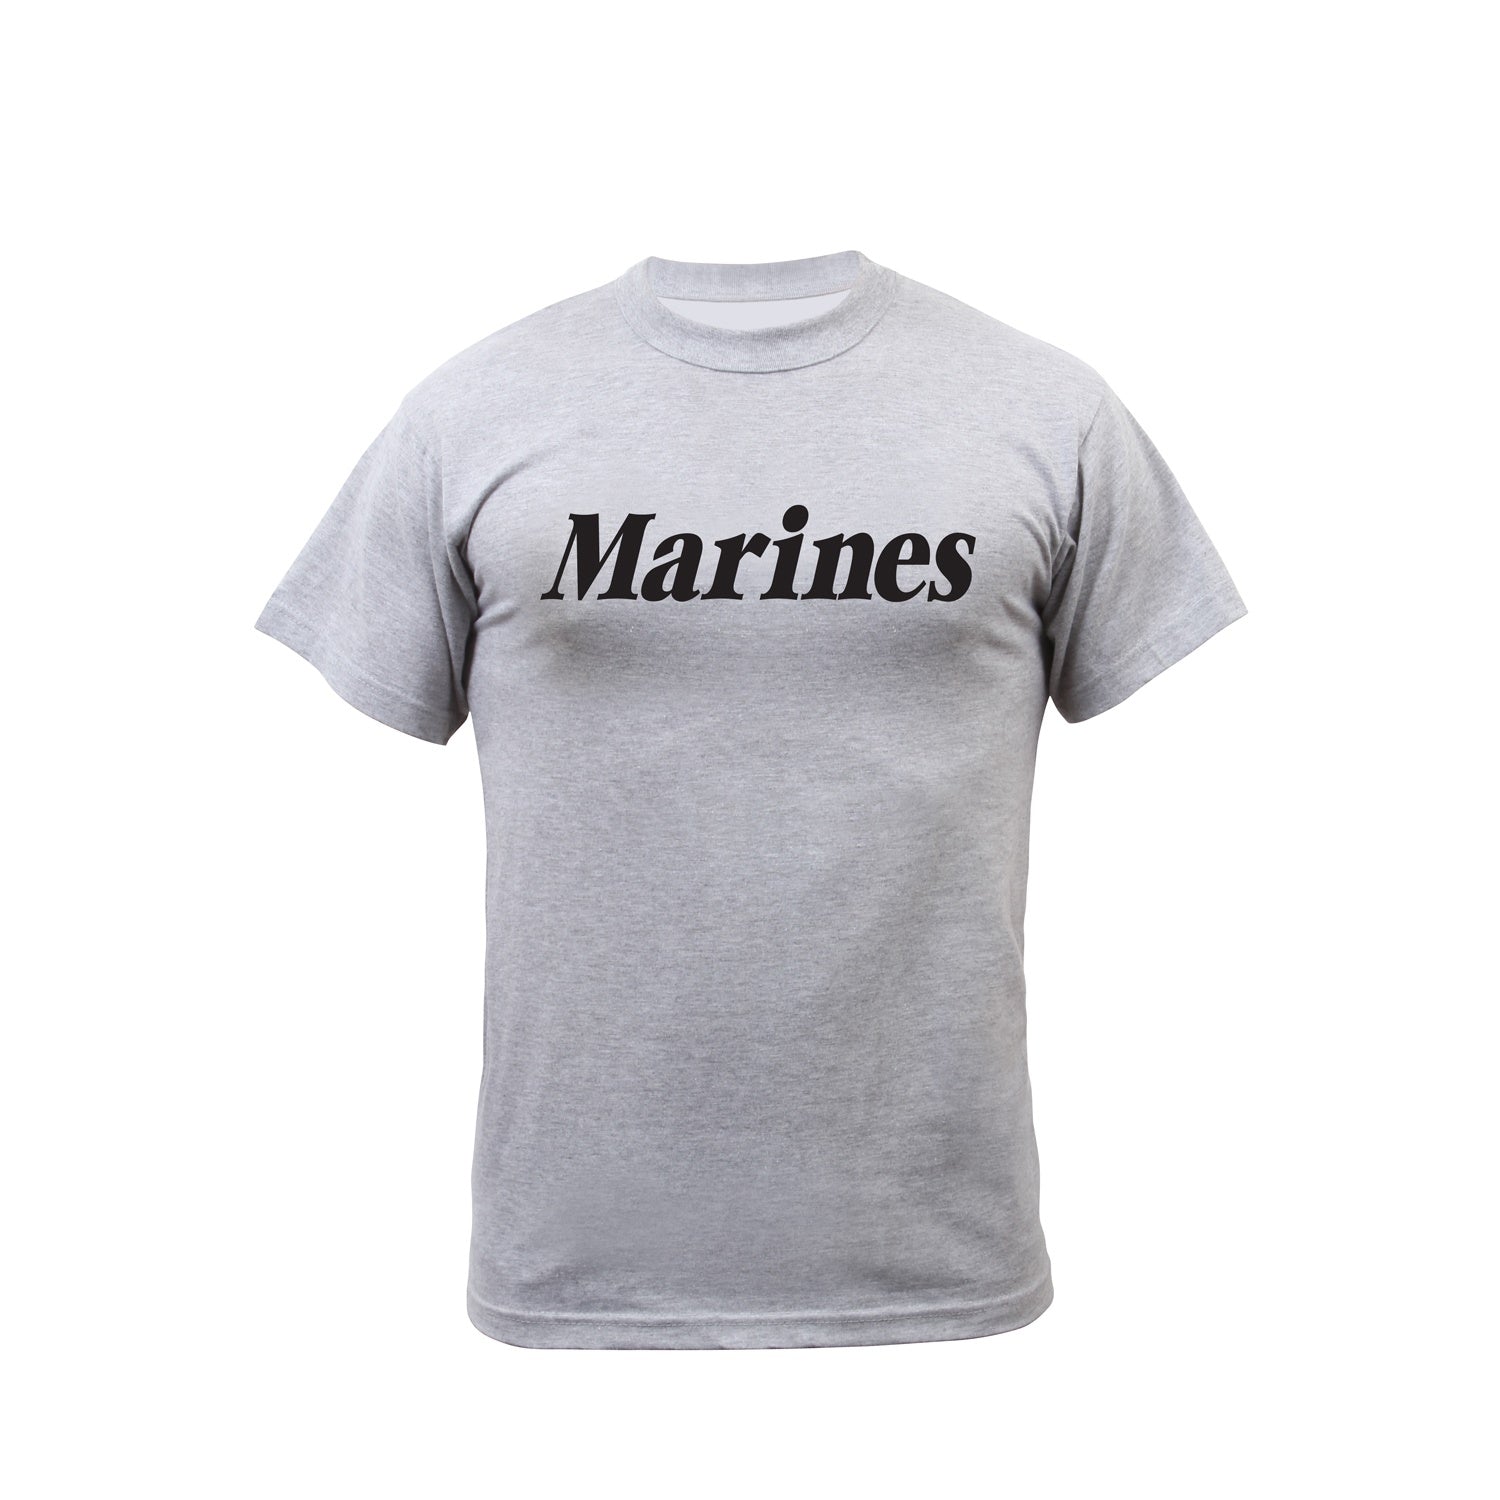 Milspec Grey Physical Training T-Shirt T-Shirts MilTac Tactical Military Outdoor Gear Australia